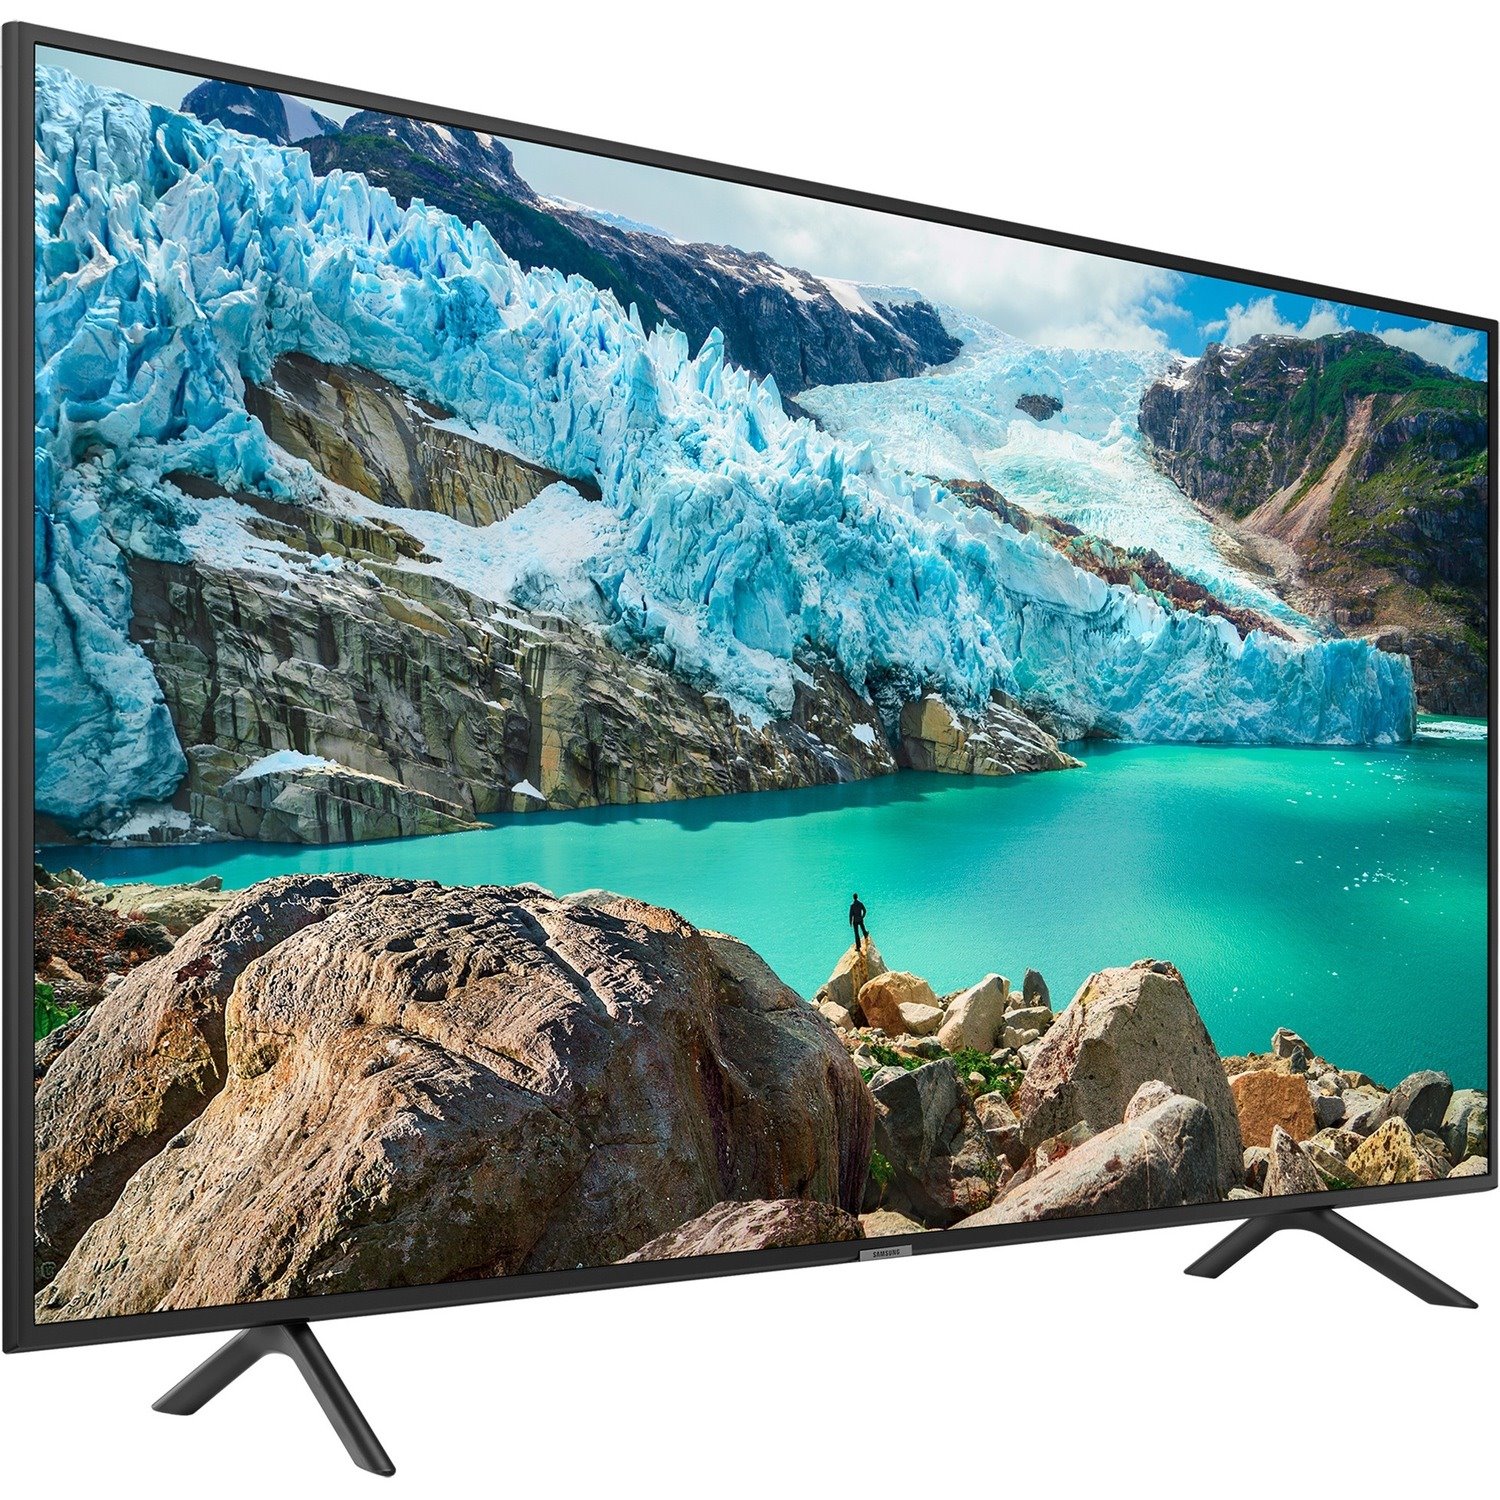 Samsung RU750 HG55RU750NF 55" Smart LED-LCD TV - 4K UHDTV - Charcoal Black